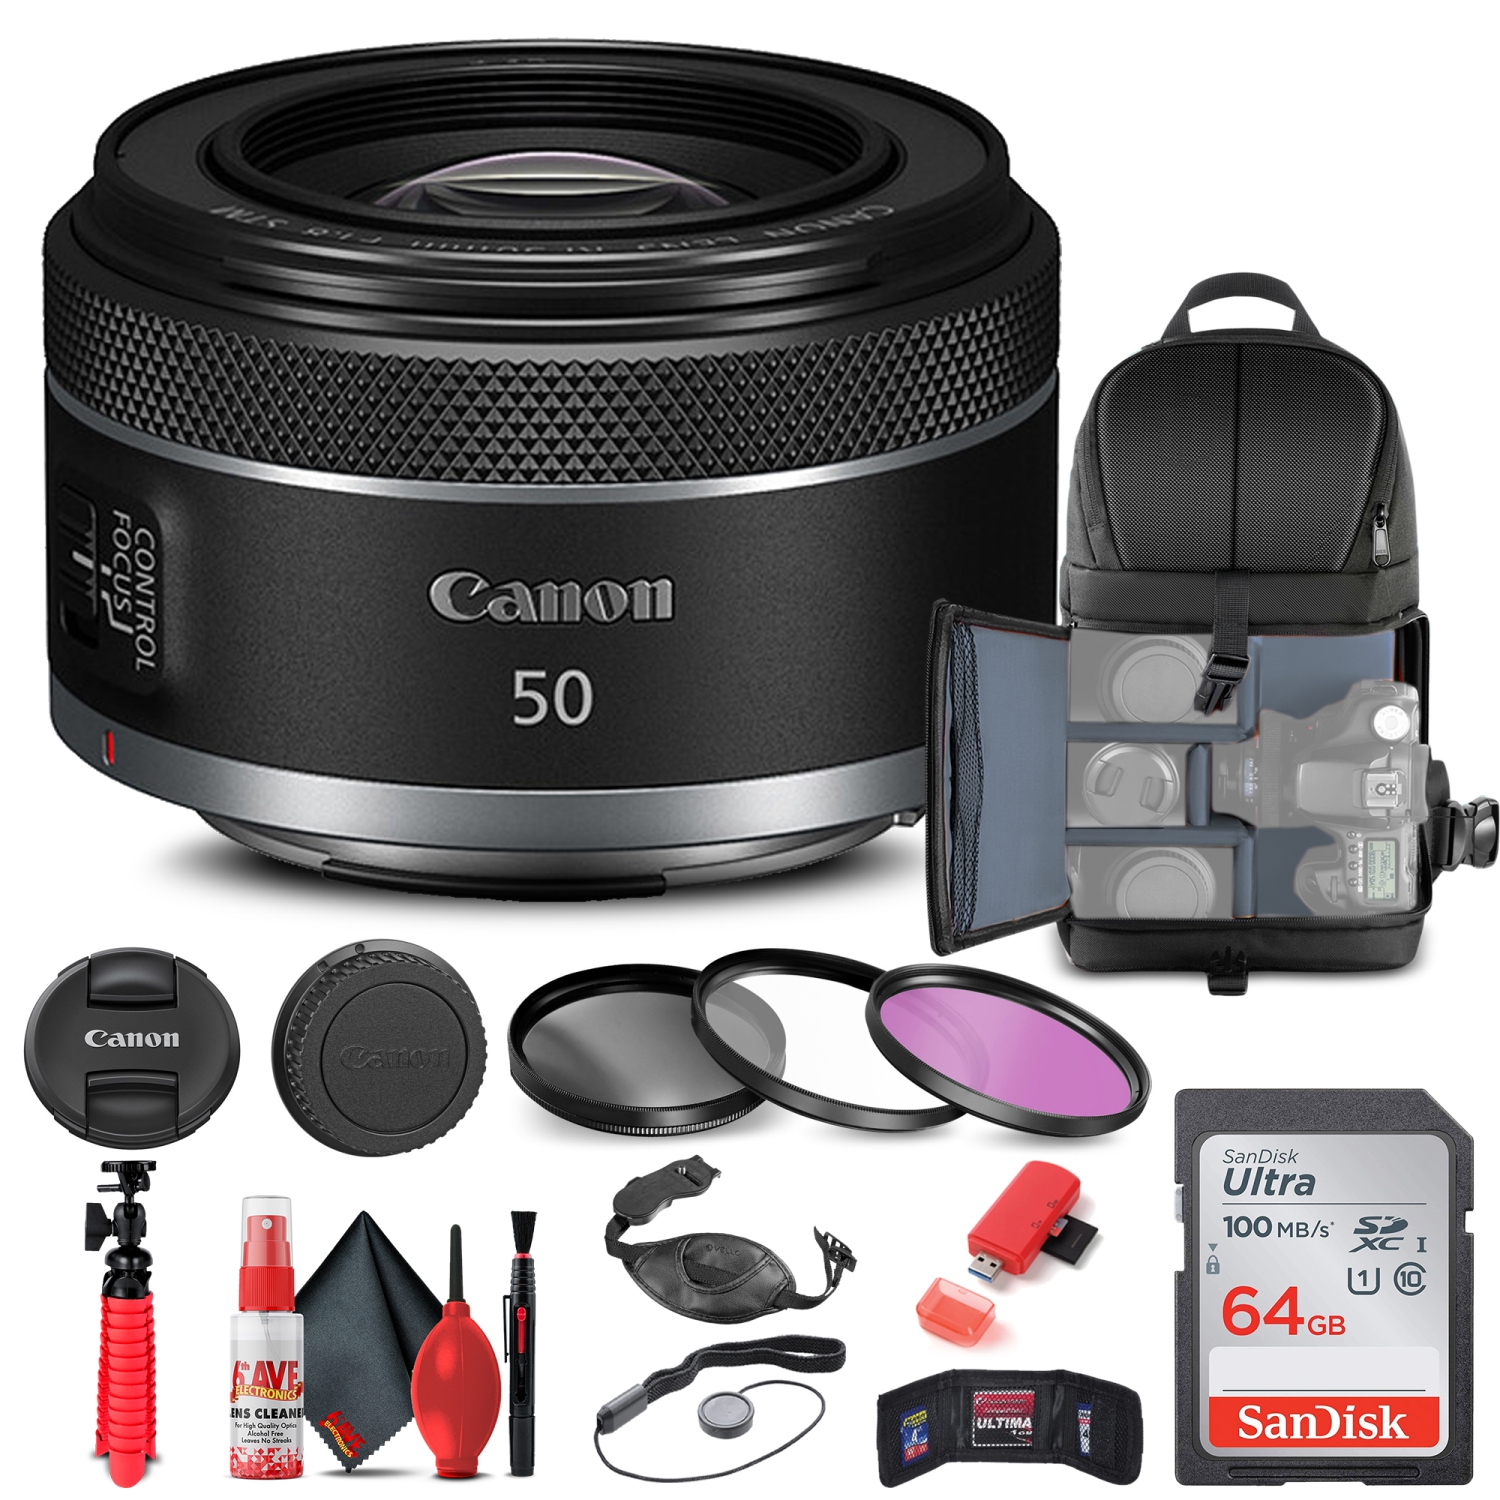 Canon RF 50mm f/1.8 STM Lens (4515C002) + Filter + BackPack + 64GB Card + More